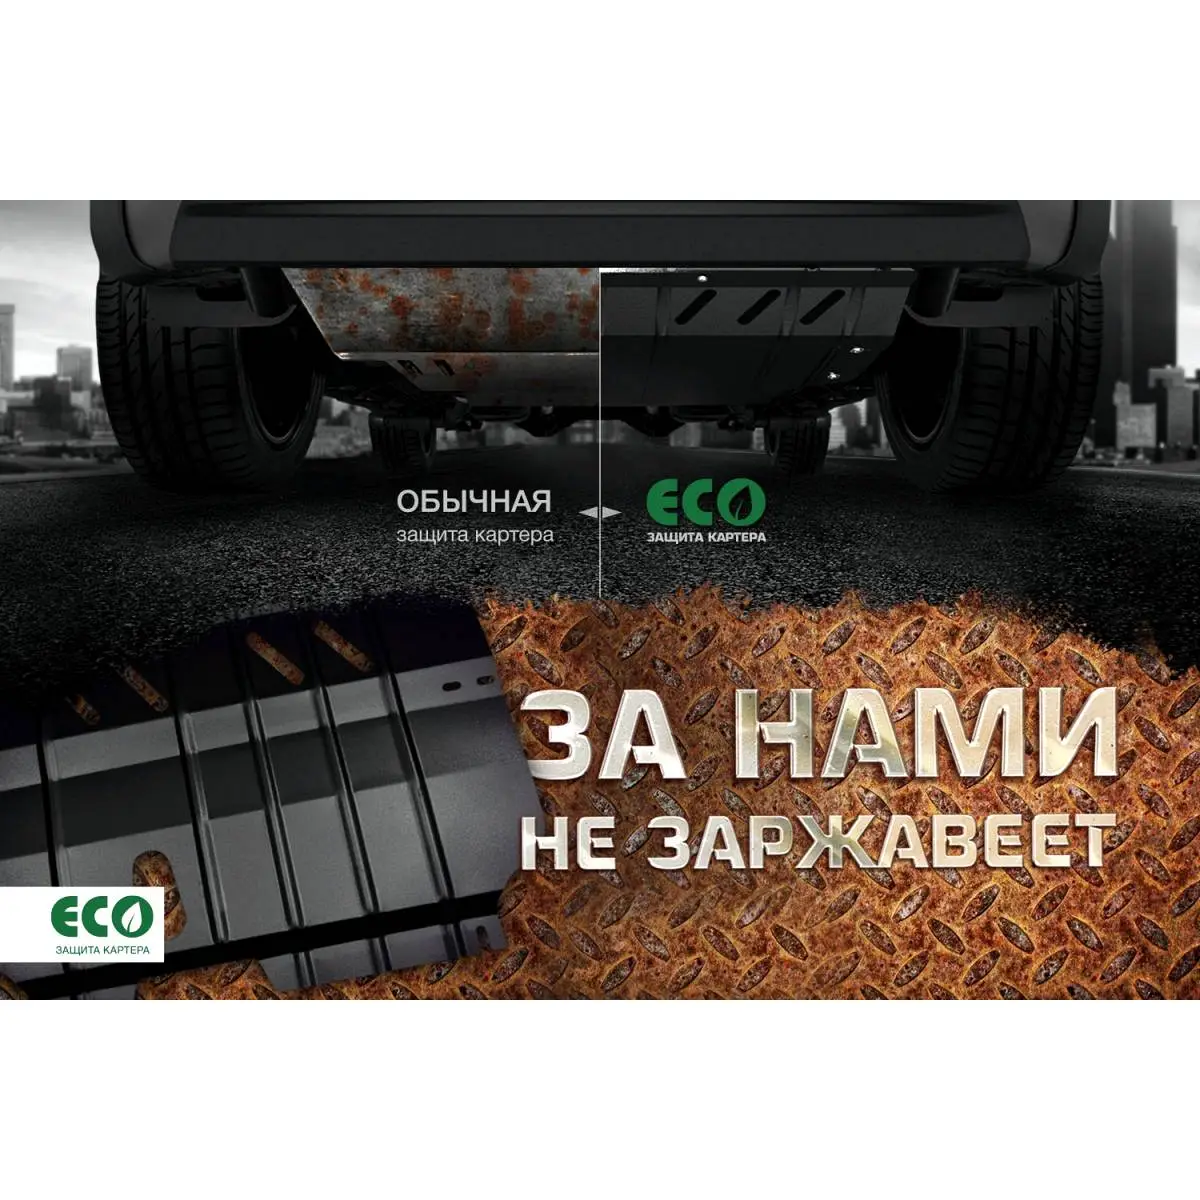 Комплект защиты картера и крепеж Eco 1437099105 5O6 9E eco2036020 XQ5OLR изображение 7